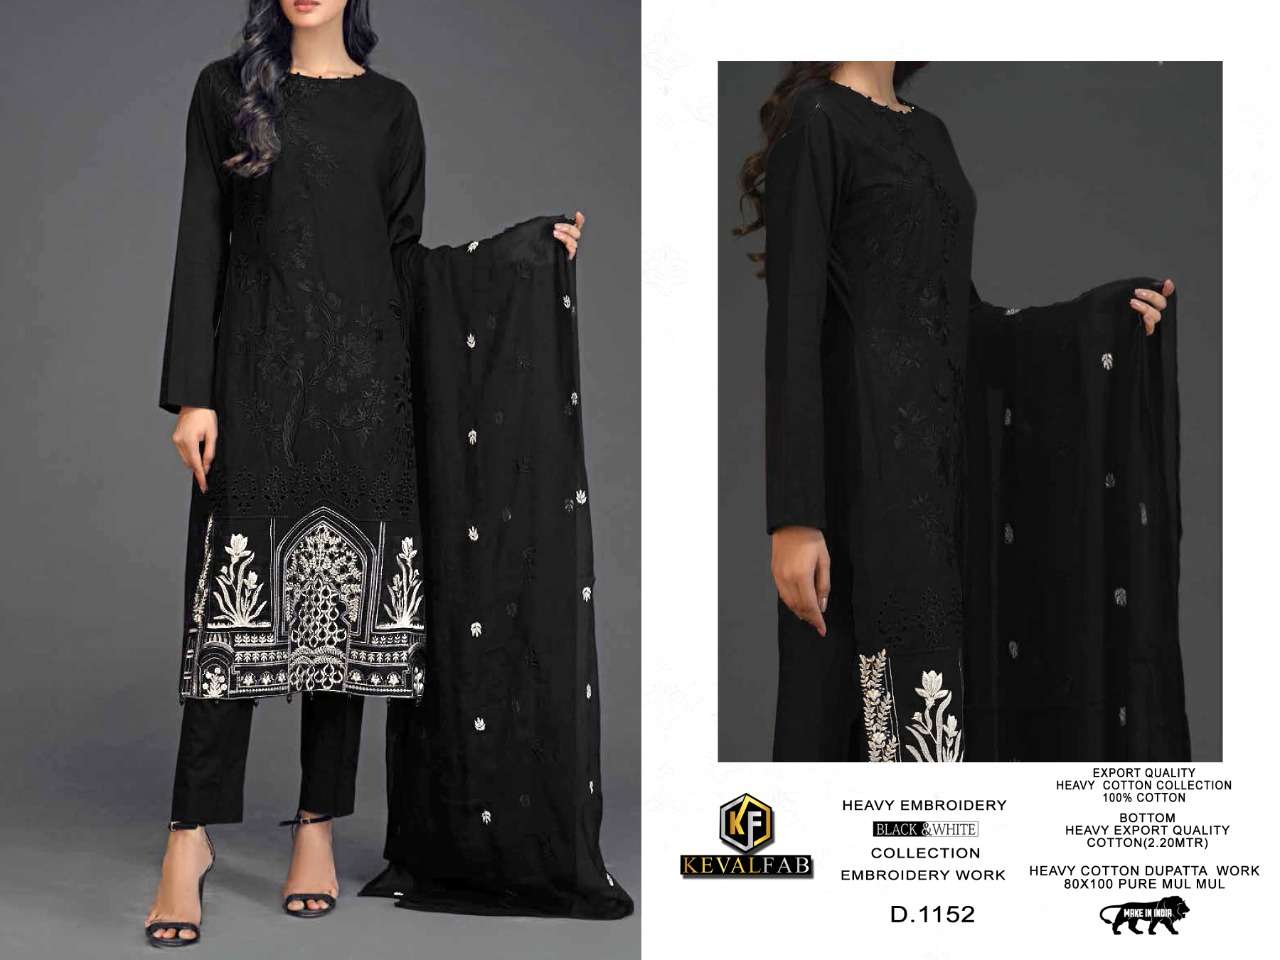 keval fab black and white premium embroidery work salwar kameez wholesale price surat